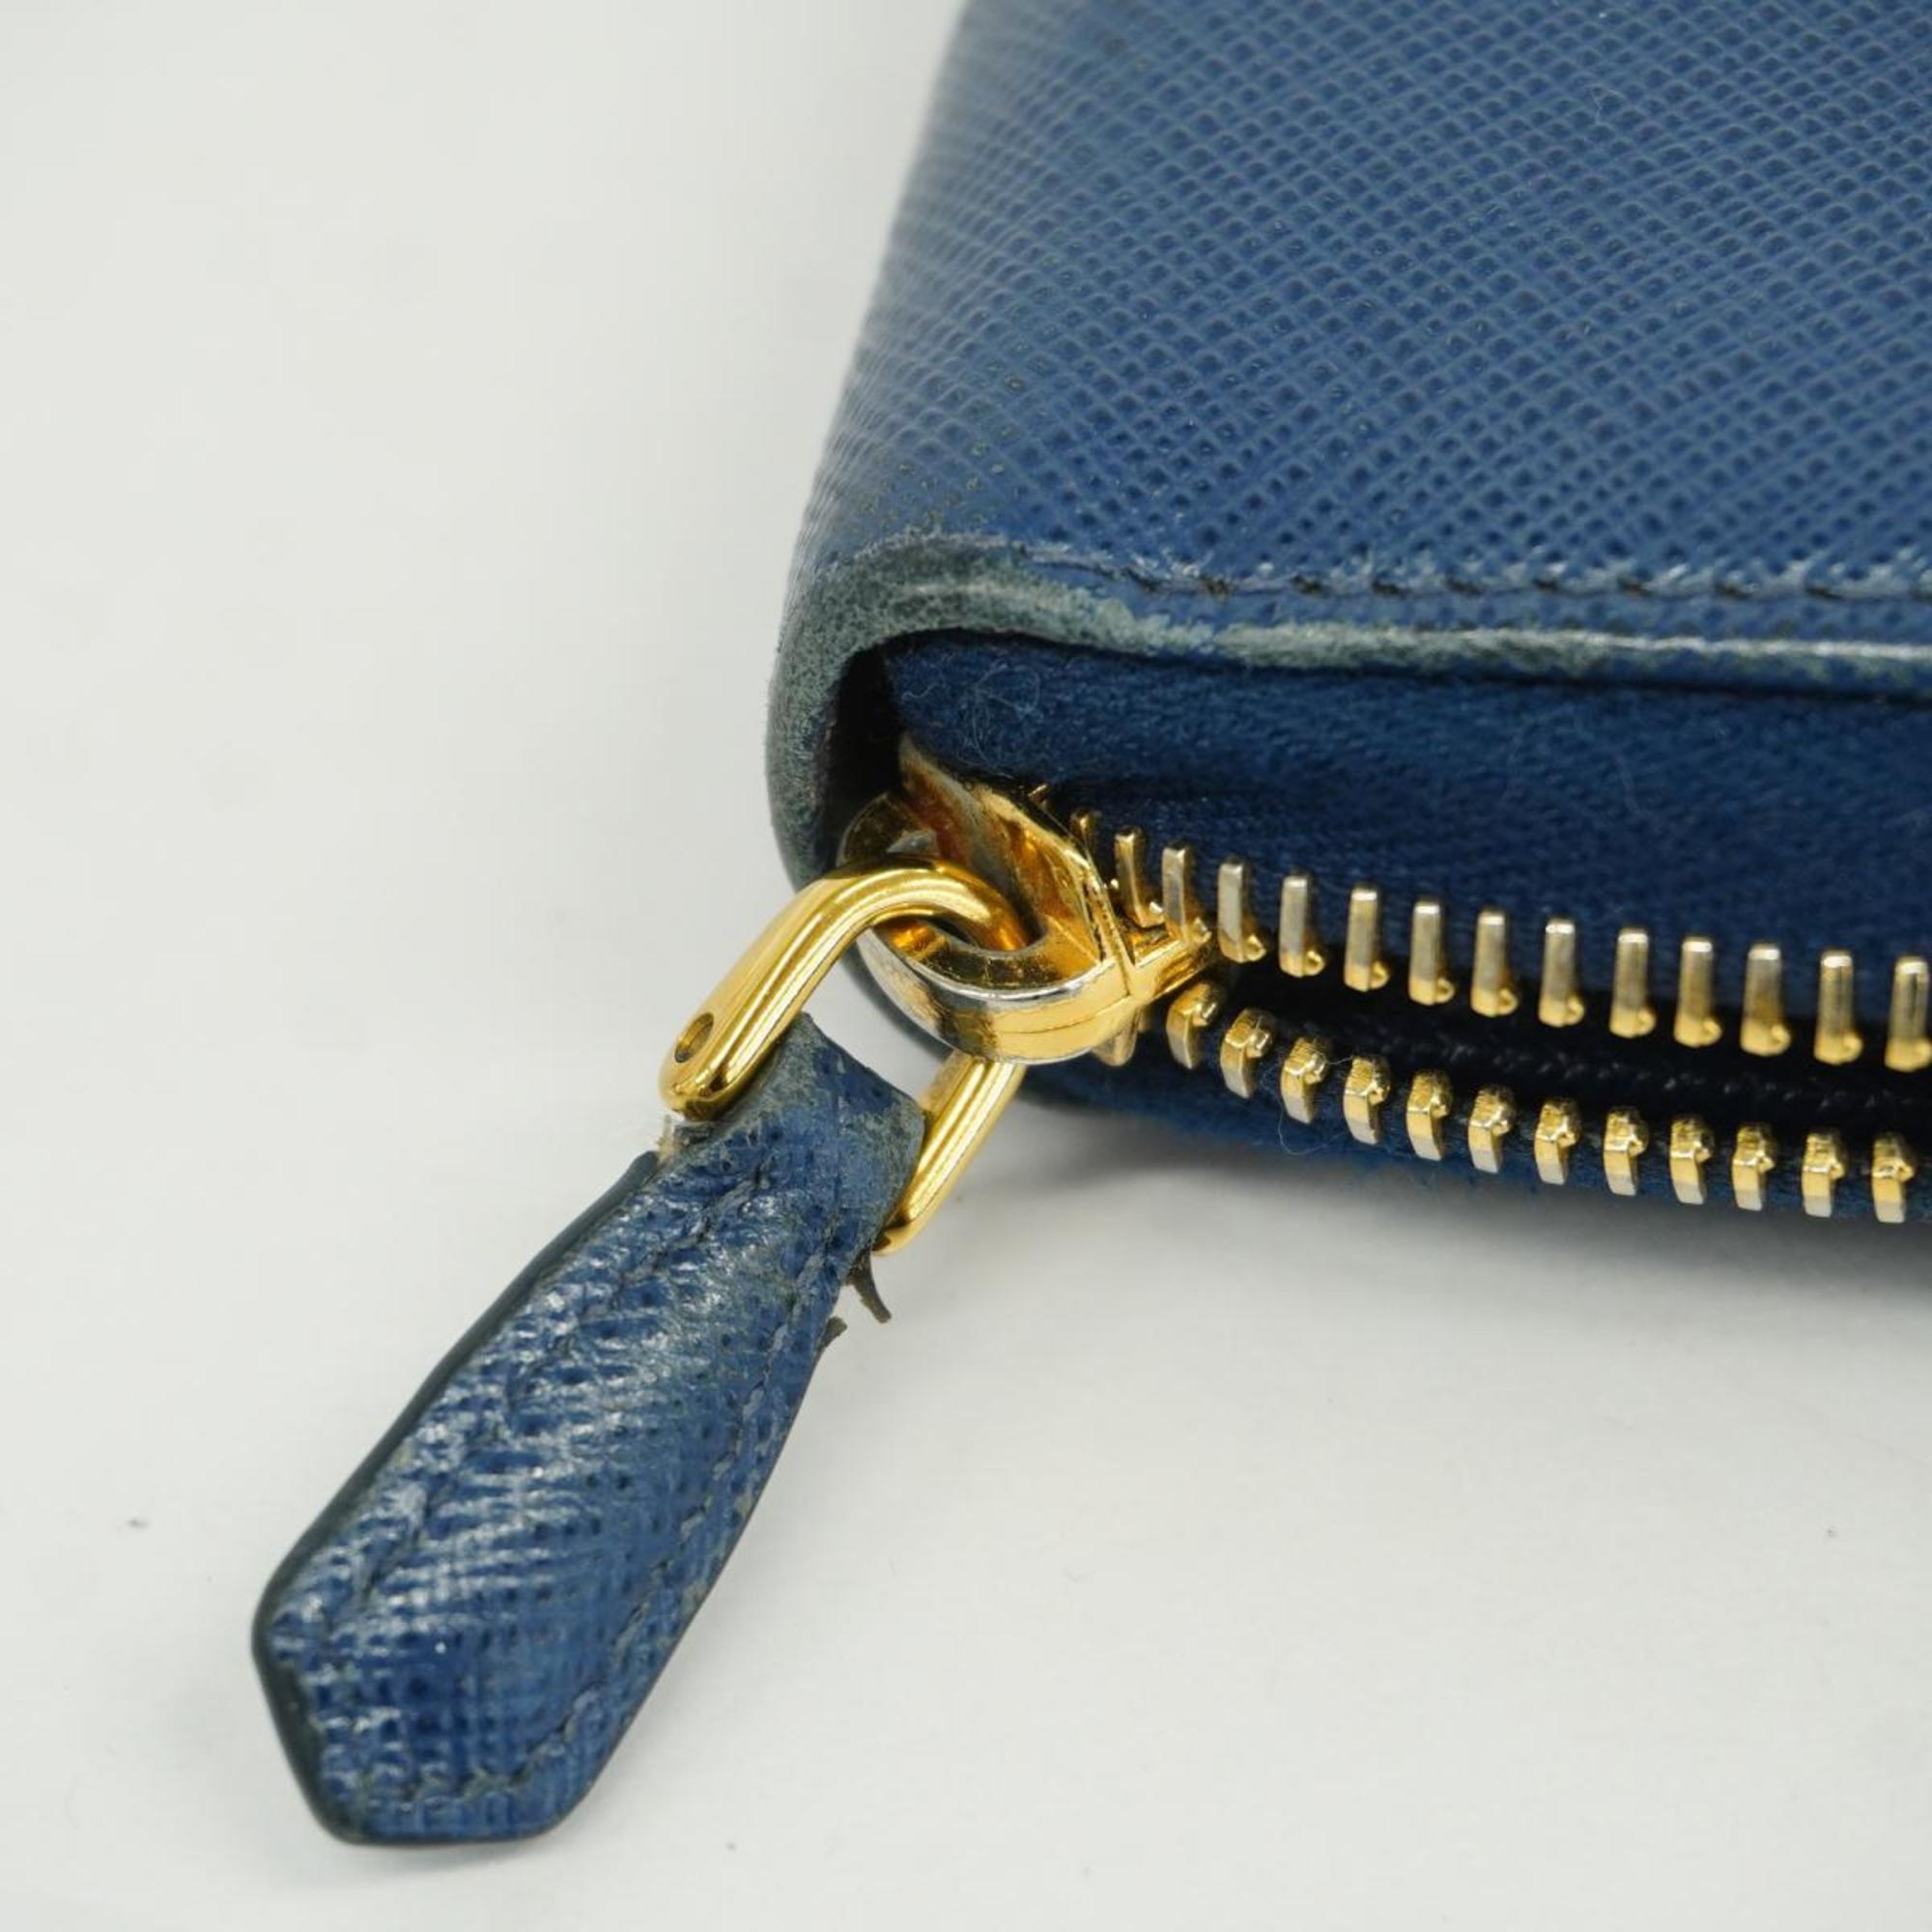 Prada Long Wallet Saffiano Leather Navy Women's